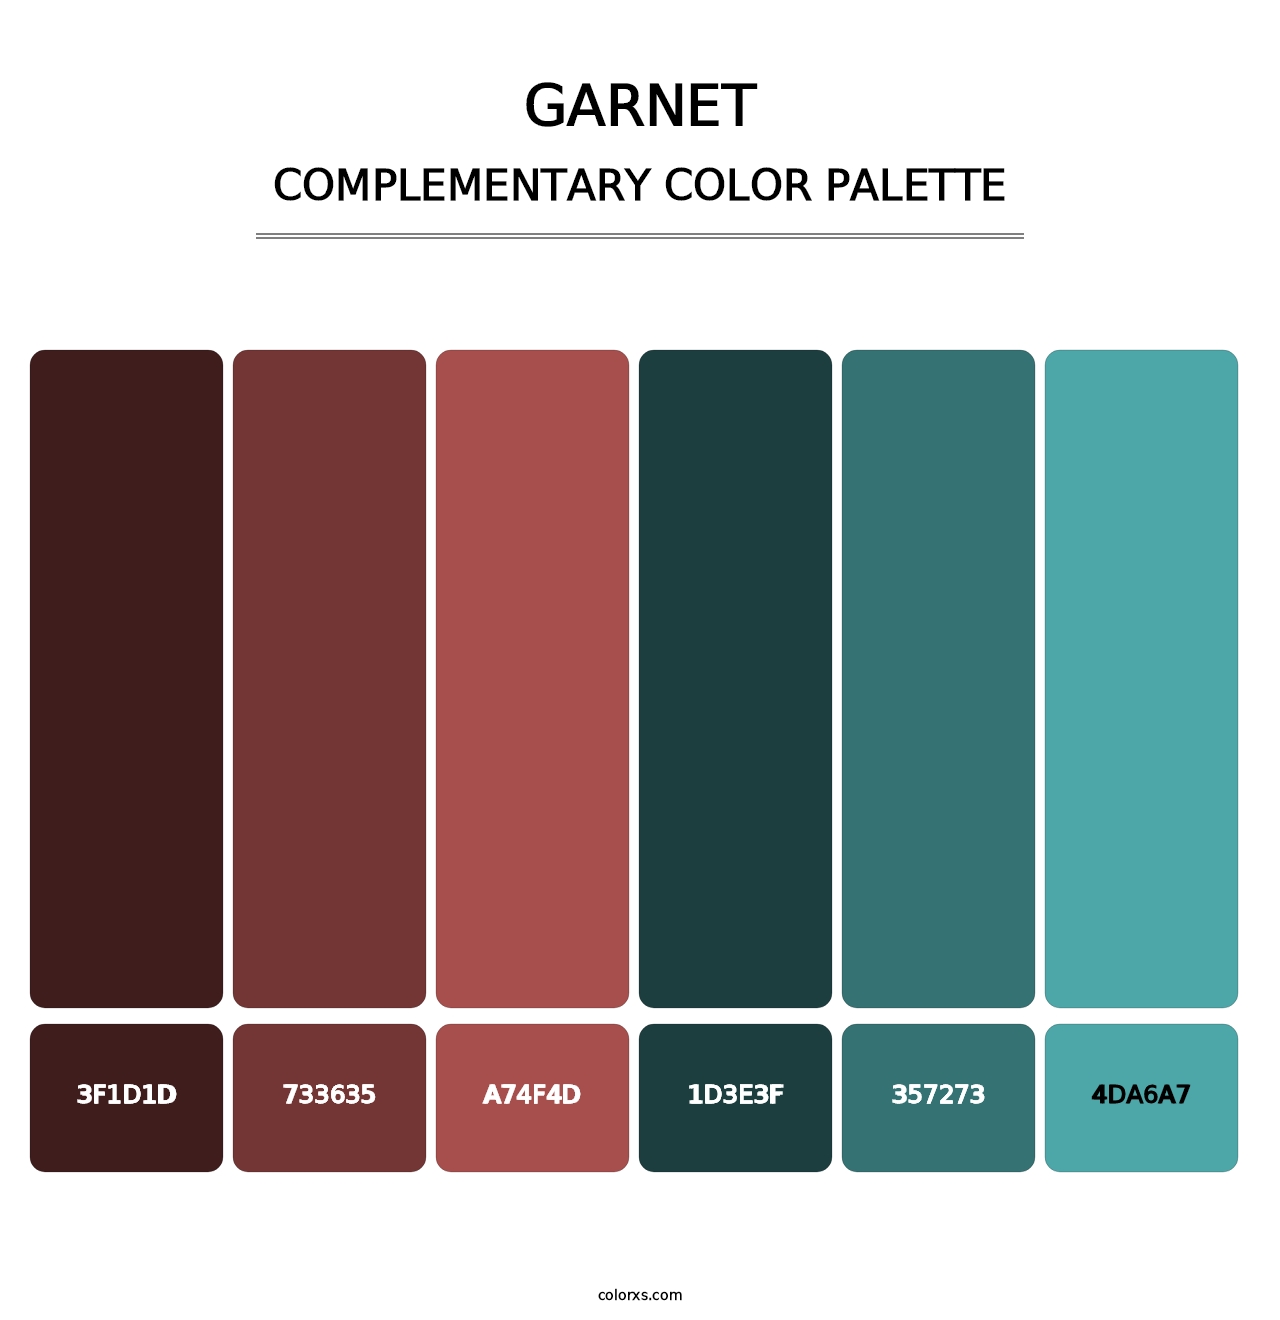 Garnet - Complementary Color Palette